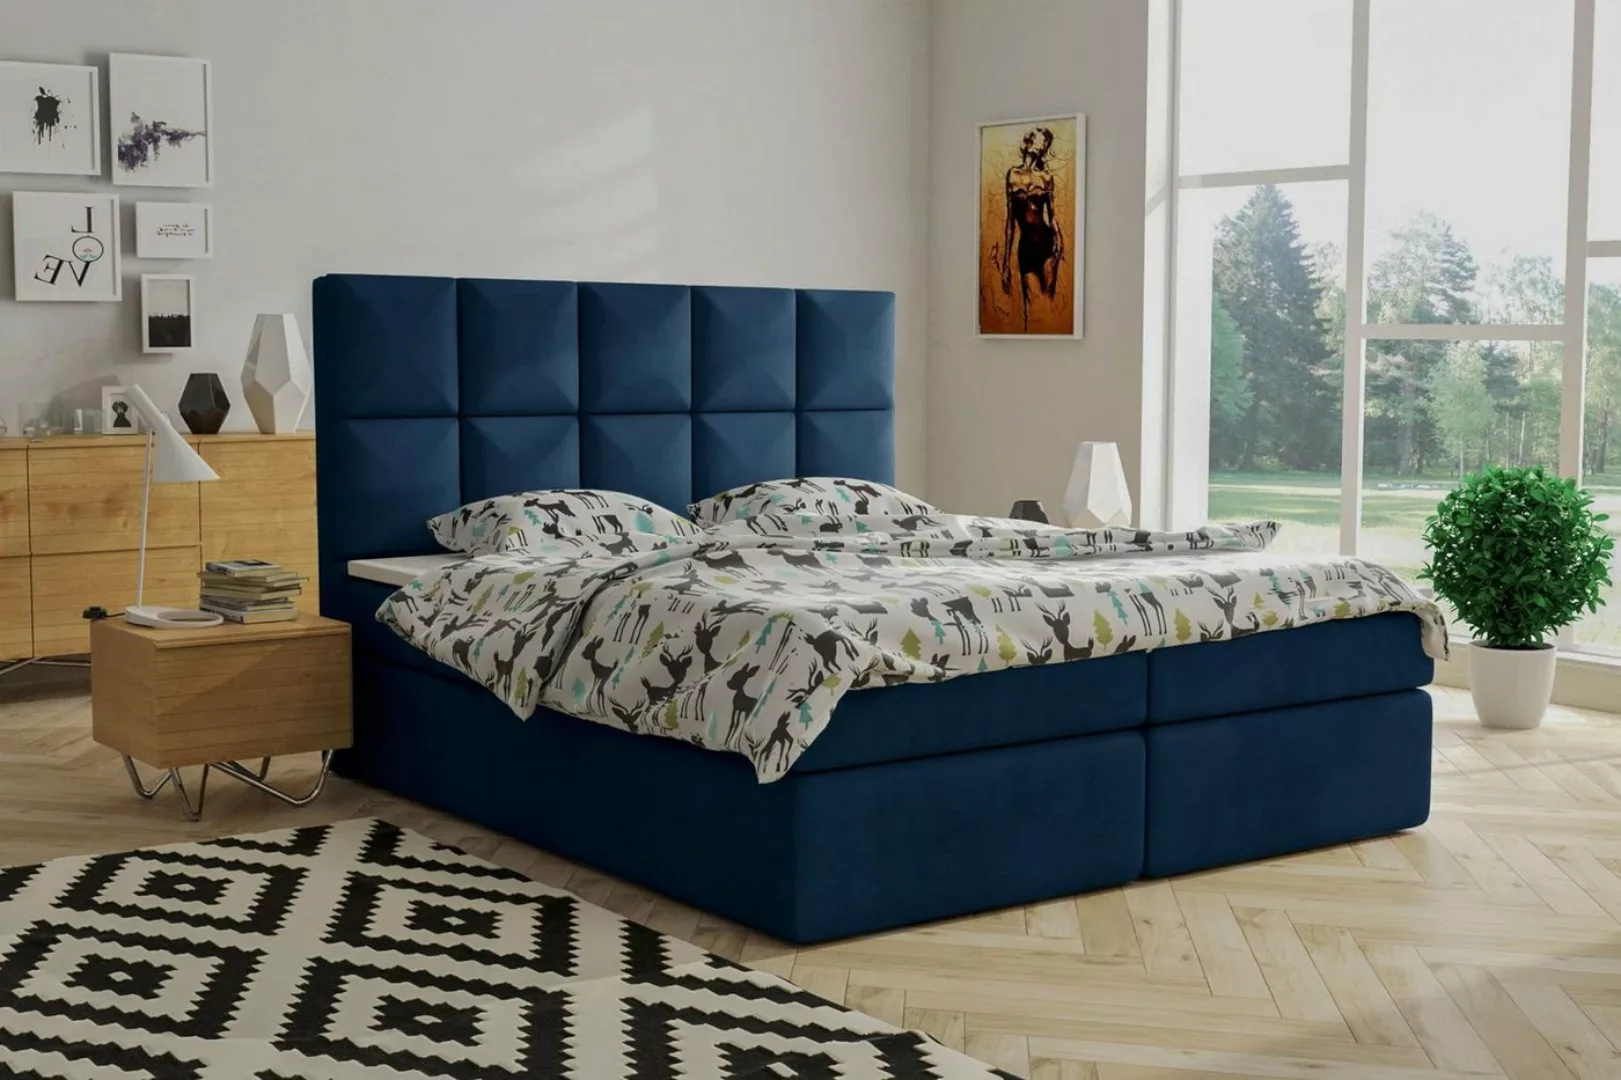 99rooms Boxspringbett Spirit (Schlafzimmerbett, Bett), Design günstig online kaufen